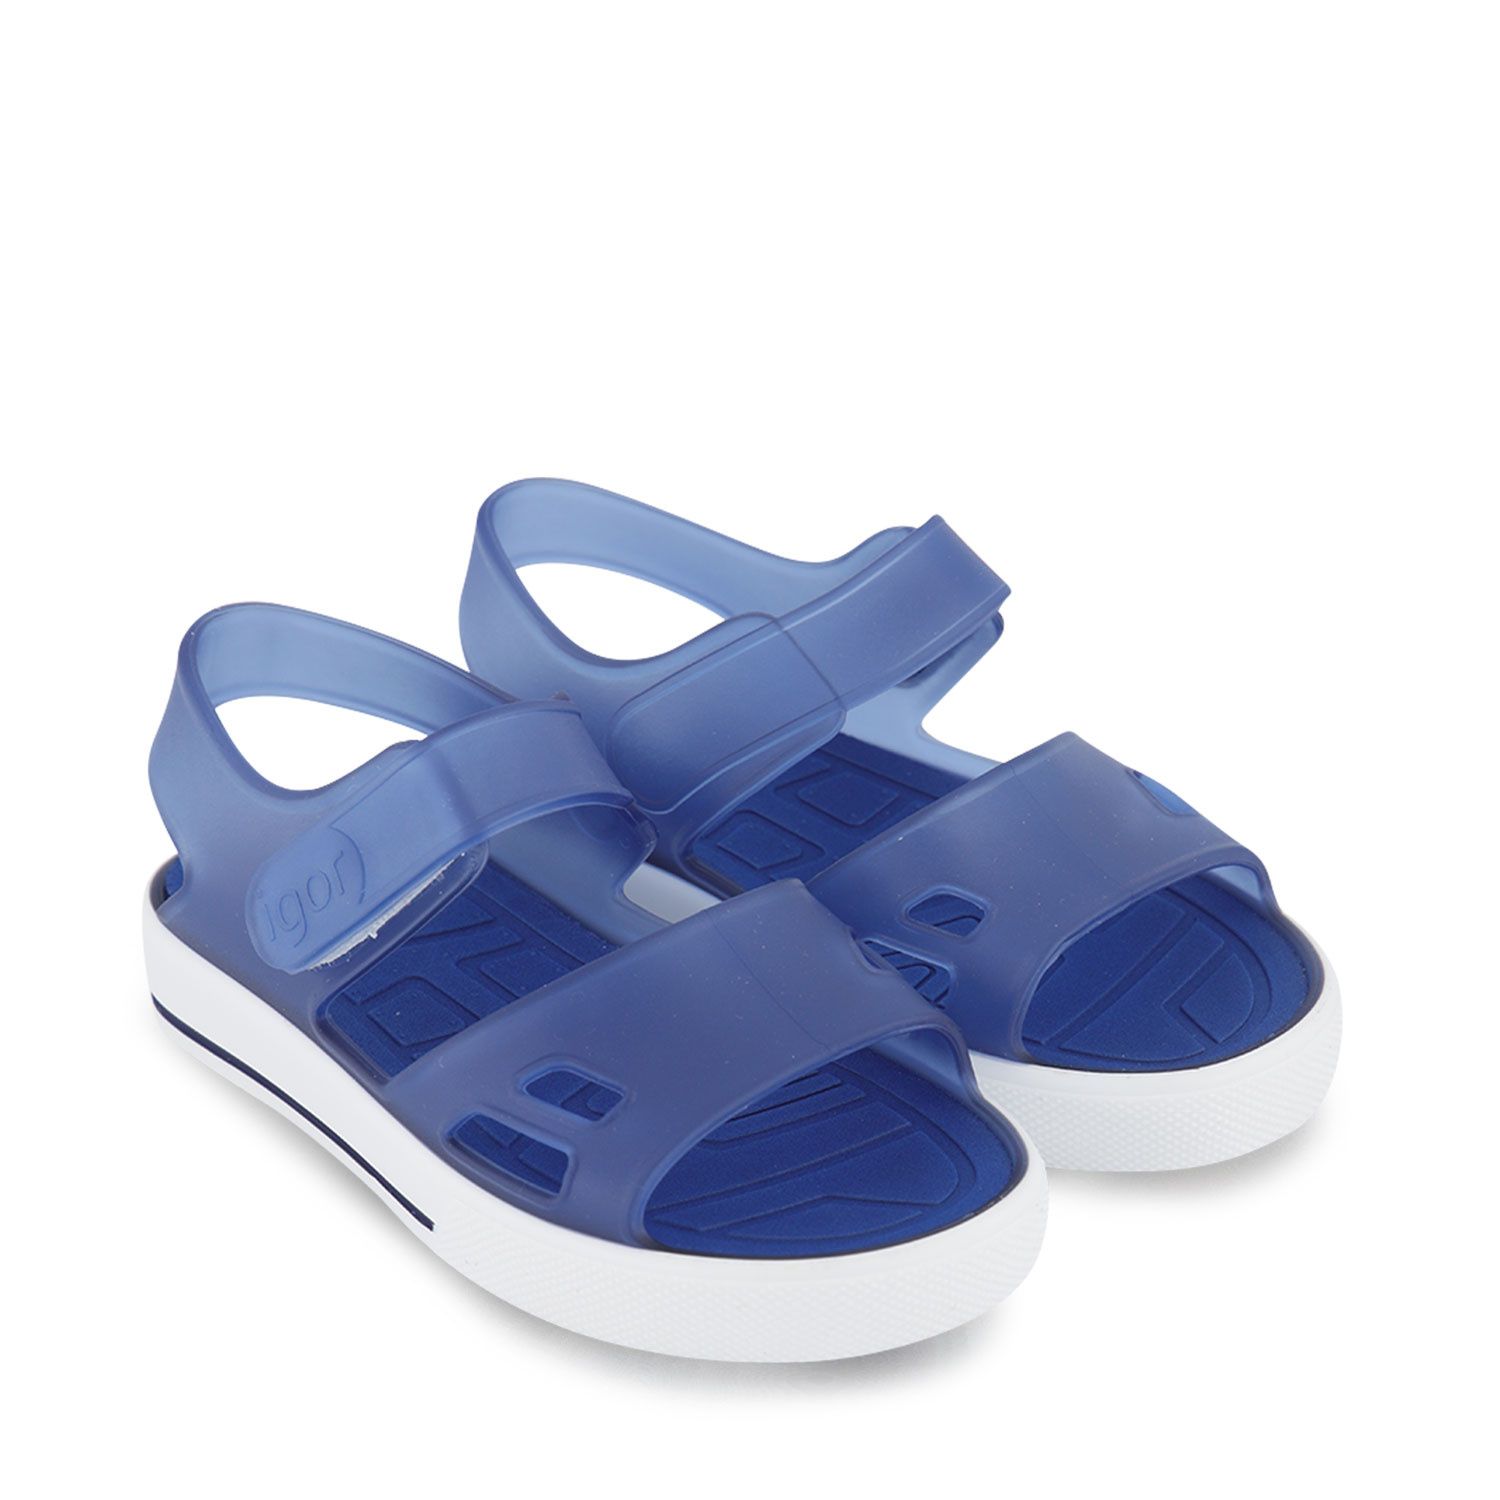 Picture of Igor S10231 kids sandals dark blue